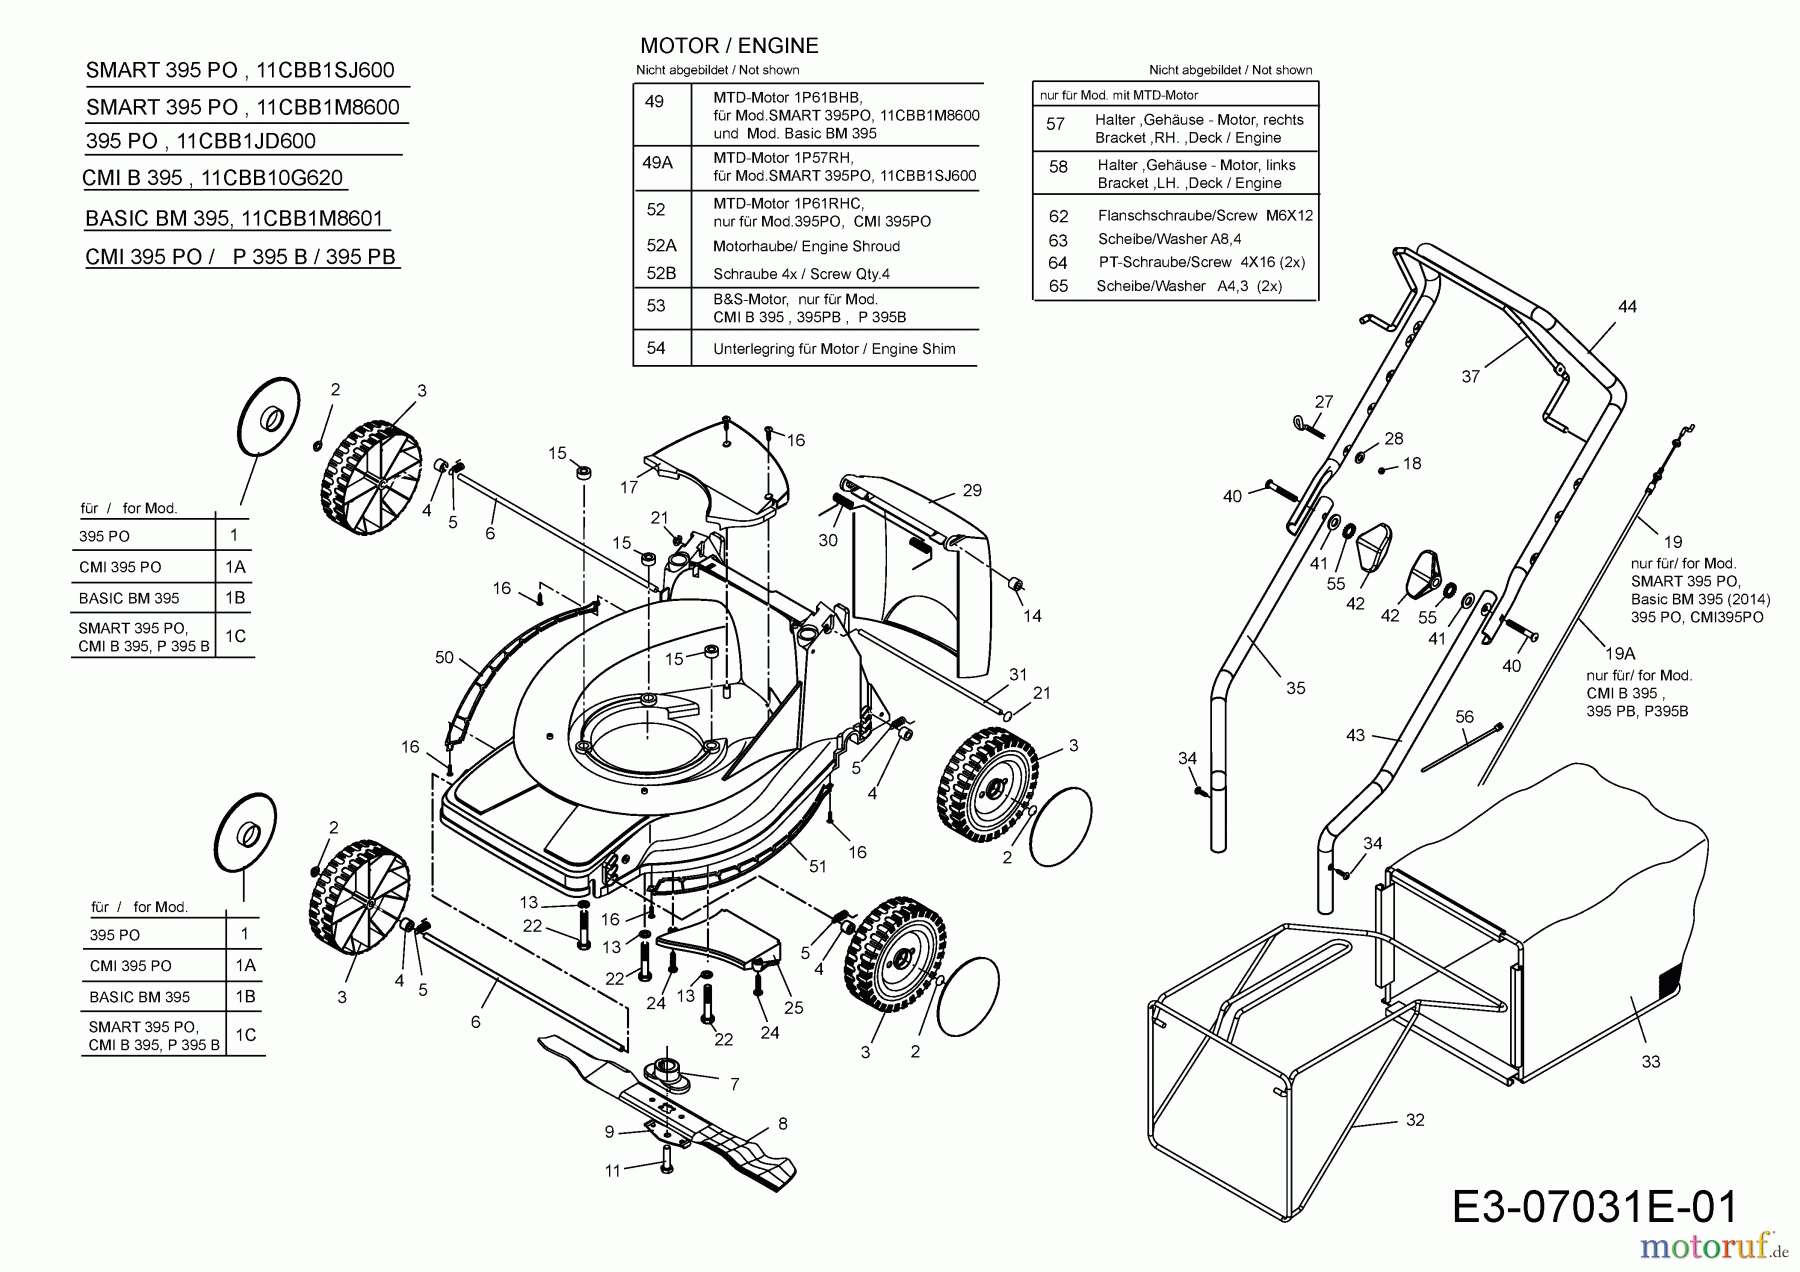  Plantiflor Motormäher Basic BM 395 11CBB1M8601  (2016) Grundgerät